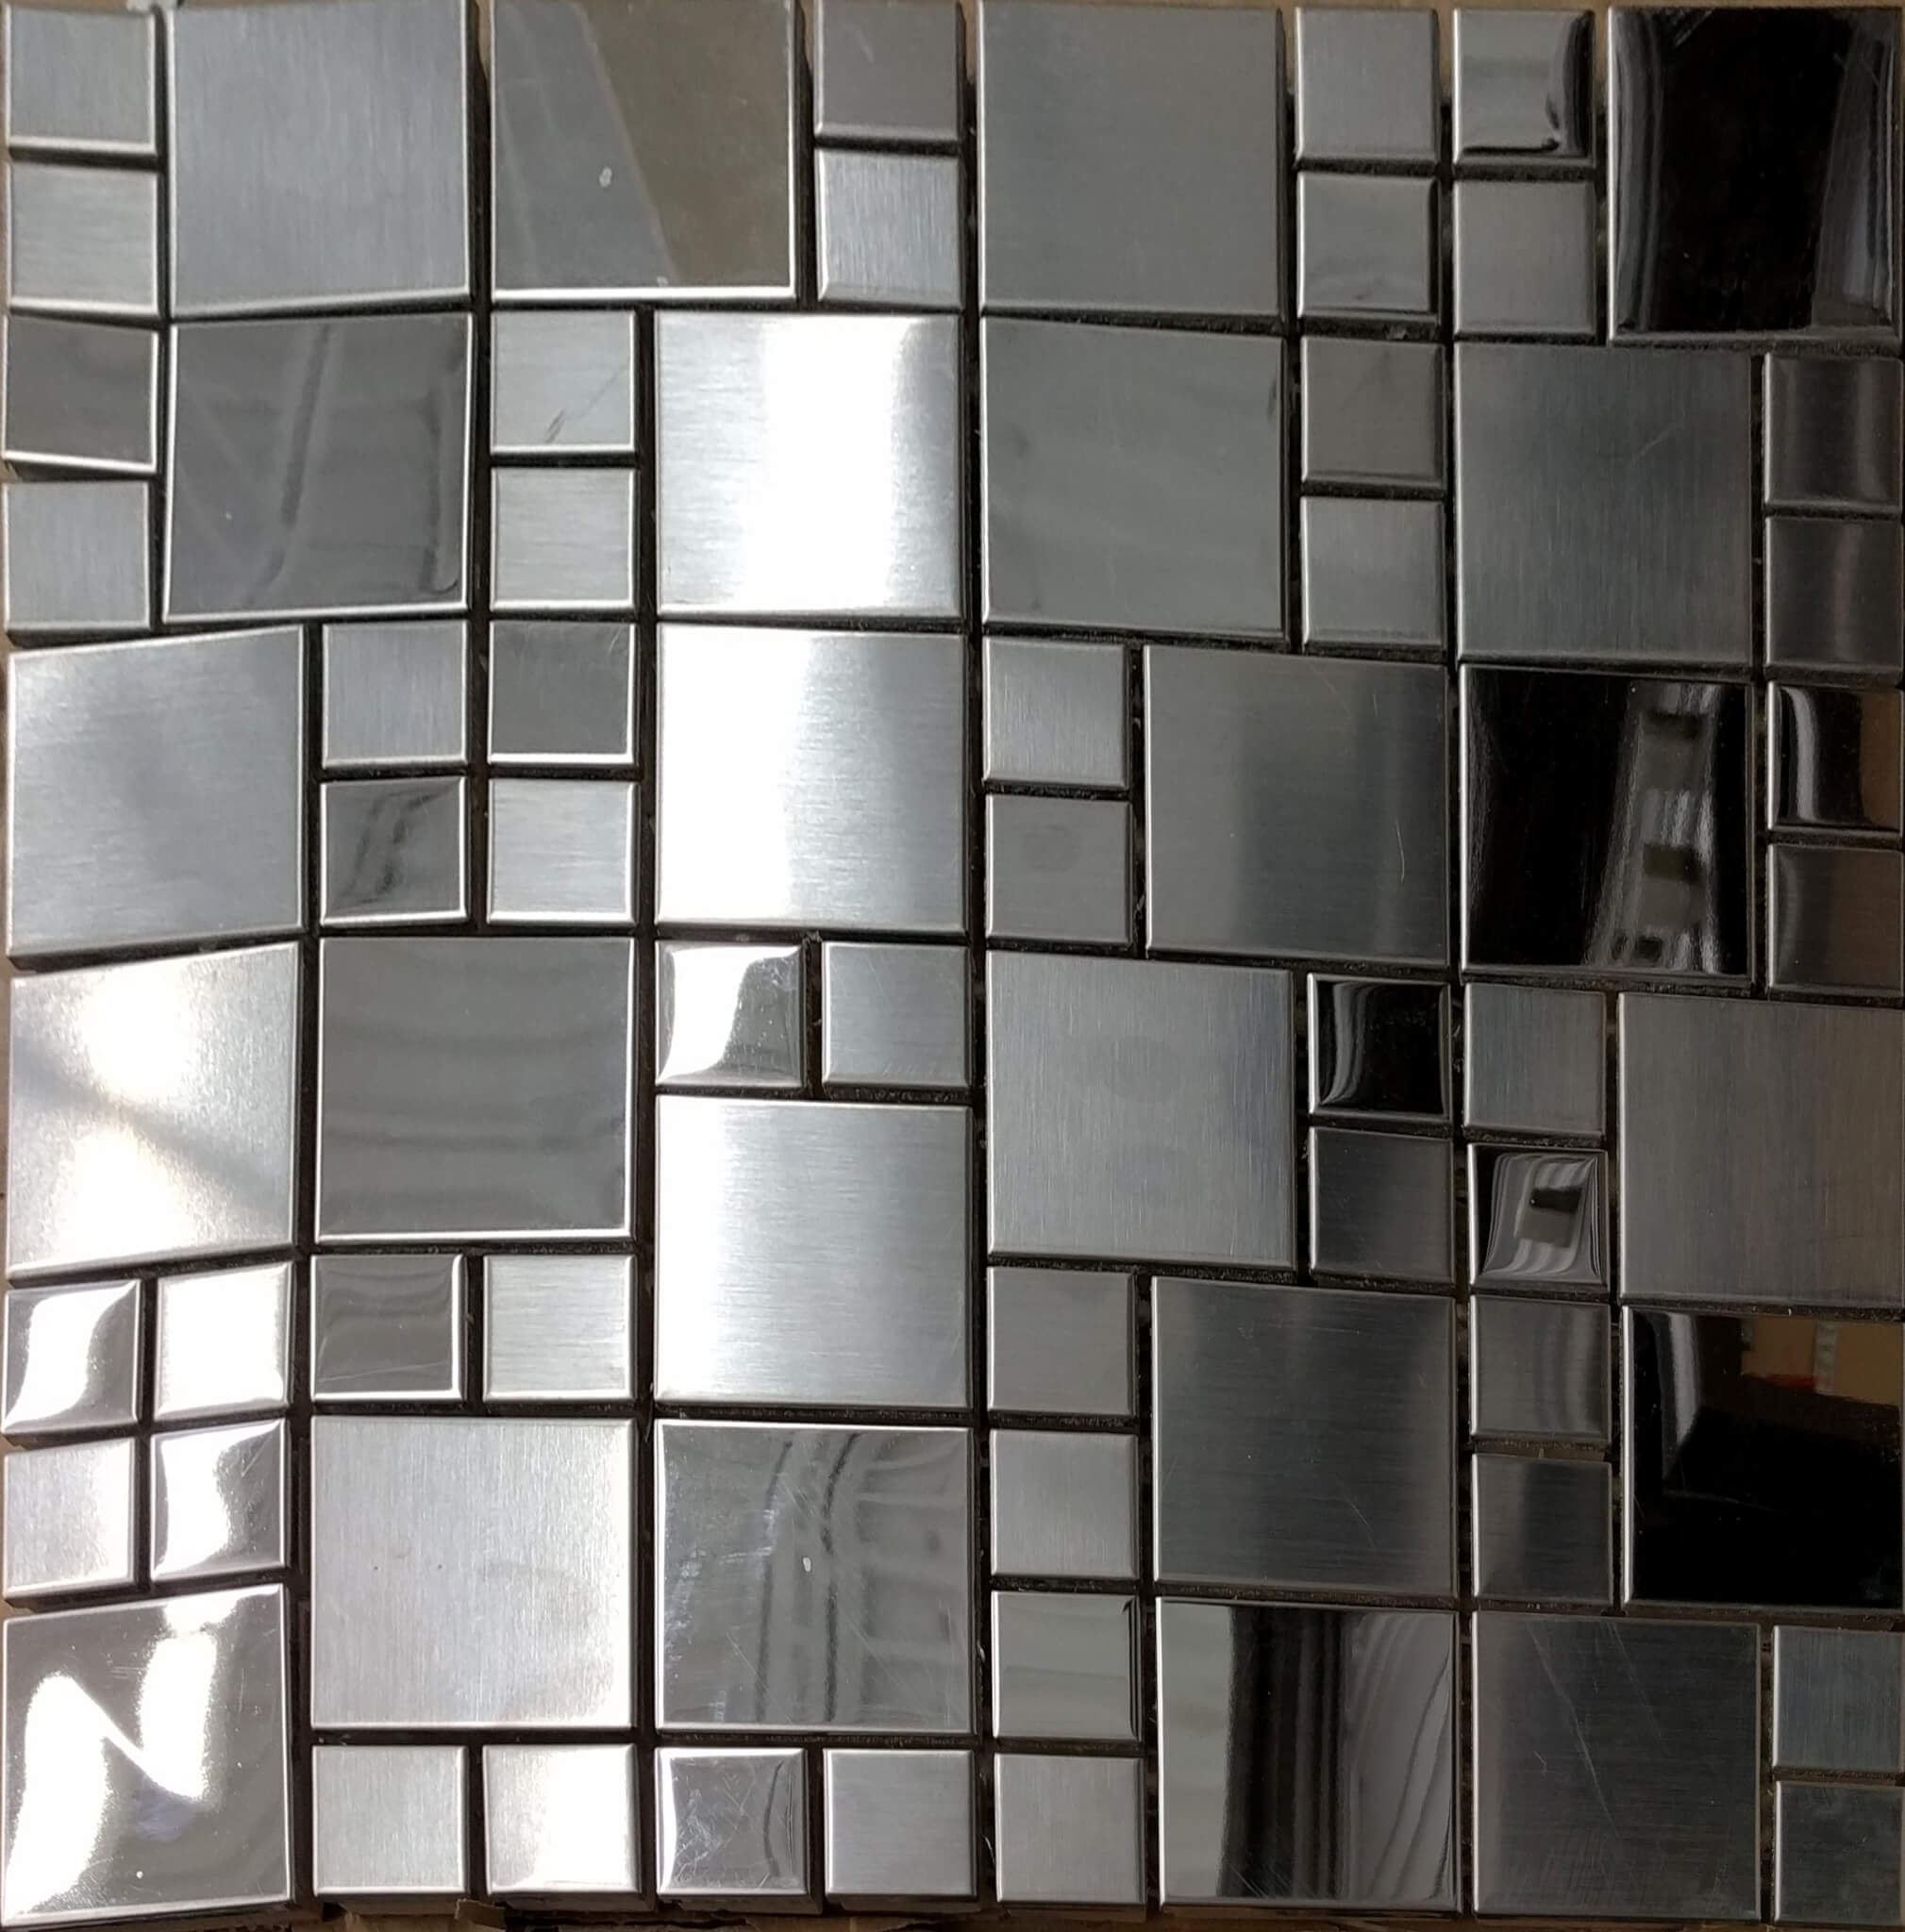 Stainless Steel Tile Hs091, Stainless Steel Tiles